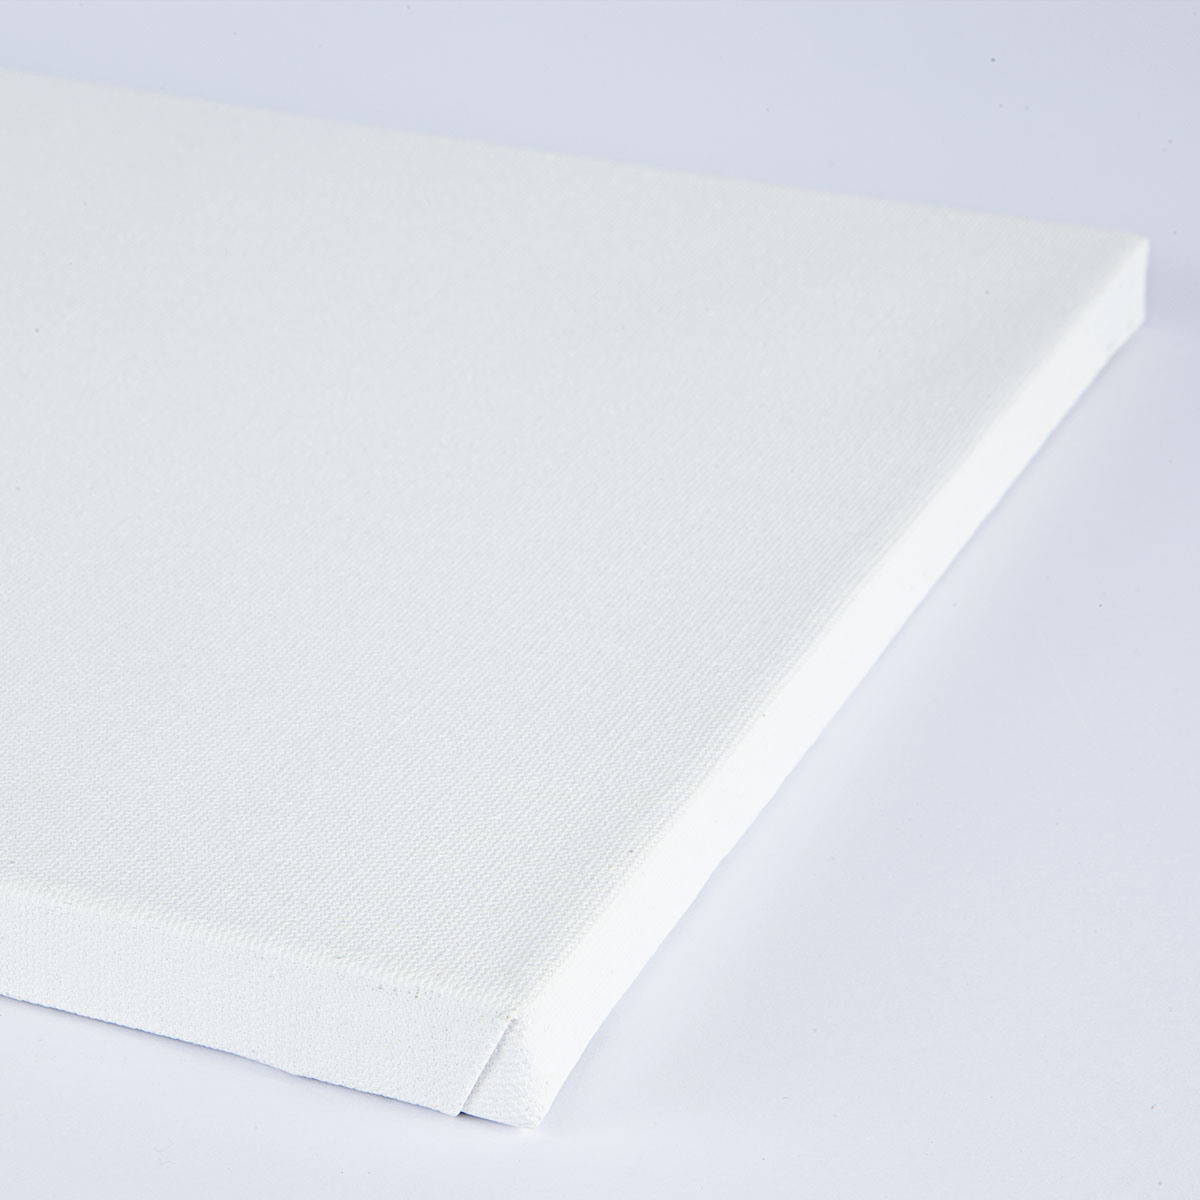 Basic Stretched Canvas 260 g Cotton F15 65 x 54 cm